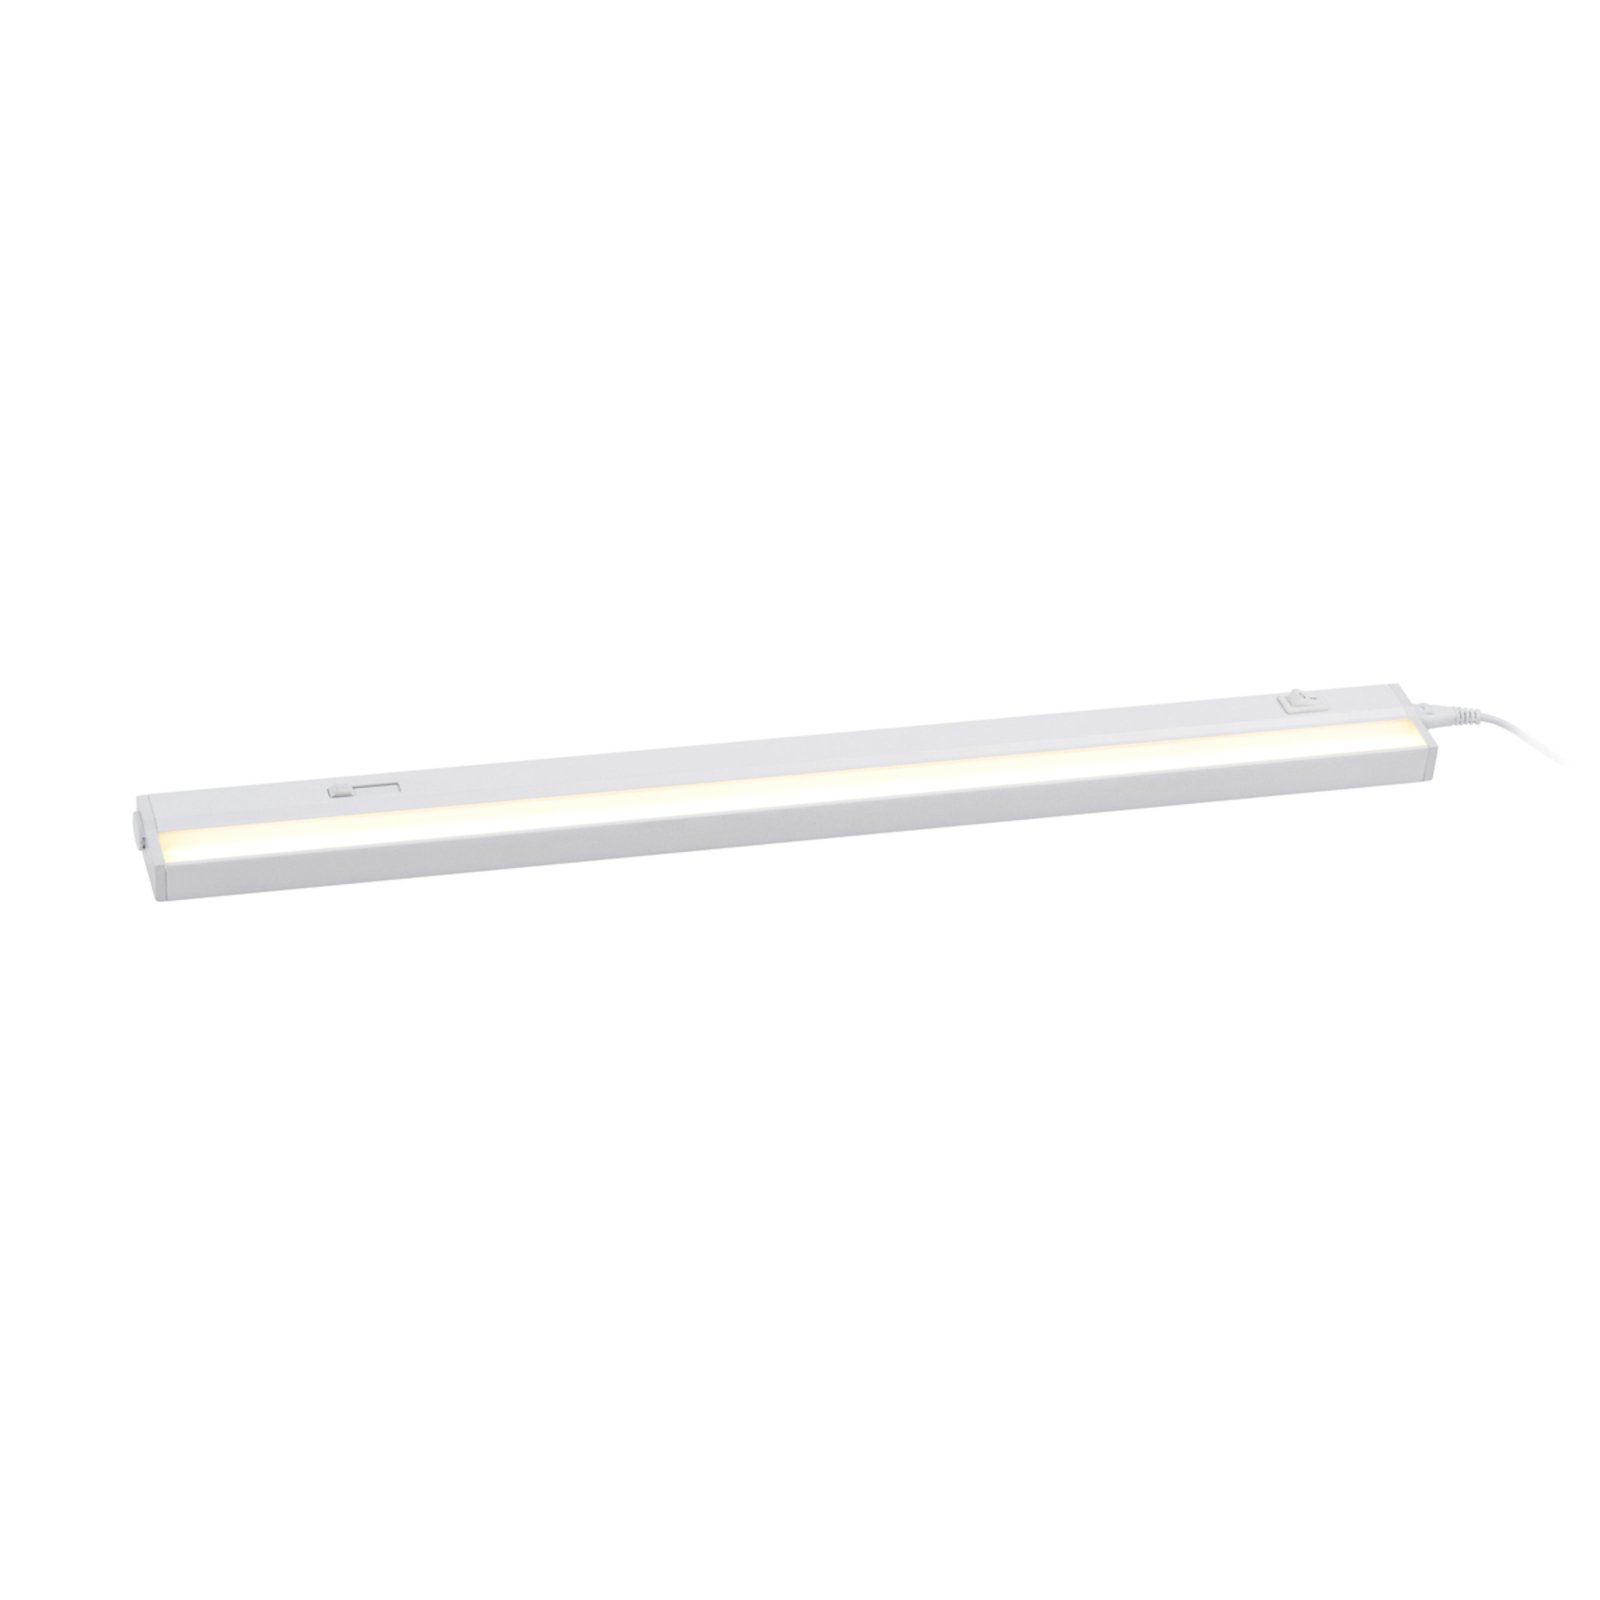 LED-kaapinalusvalaisin Conero, pituus 42,4 cm